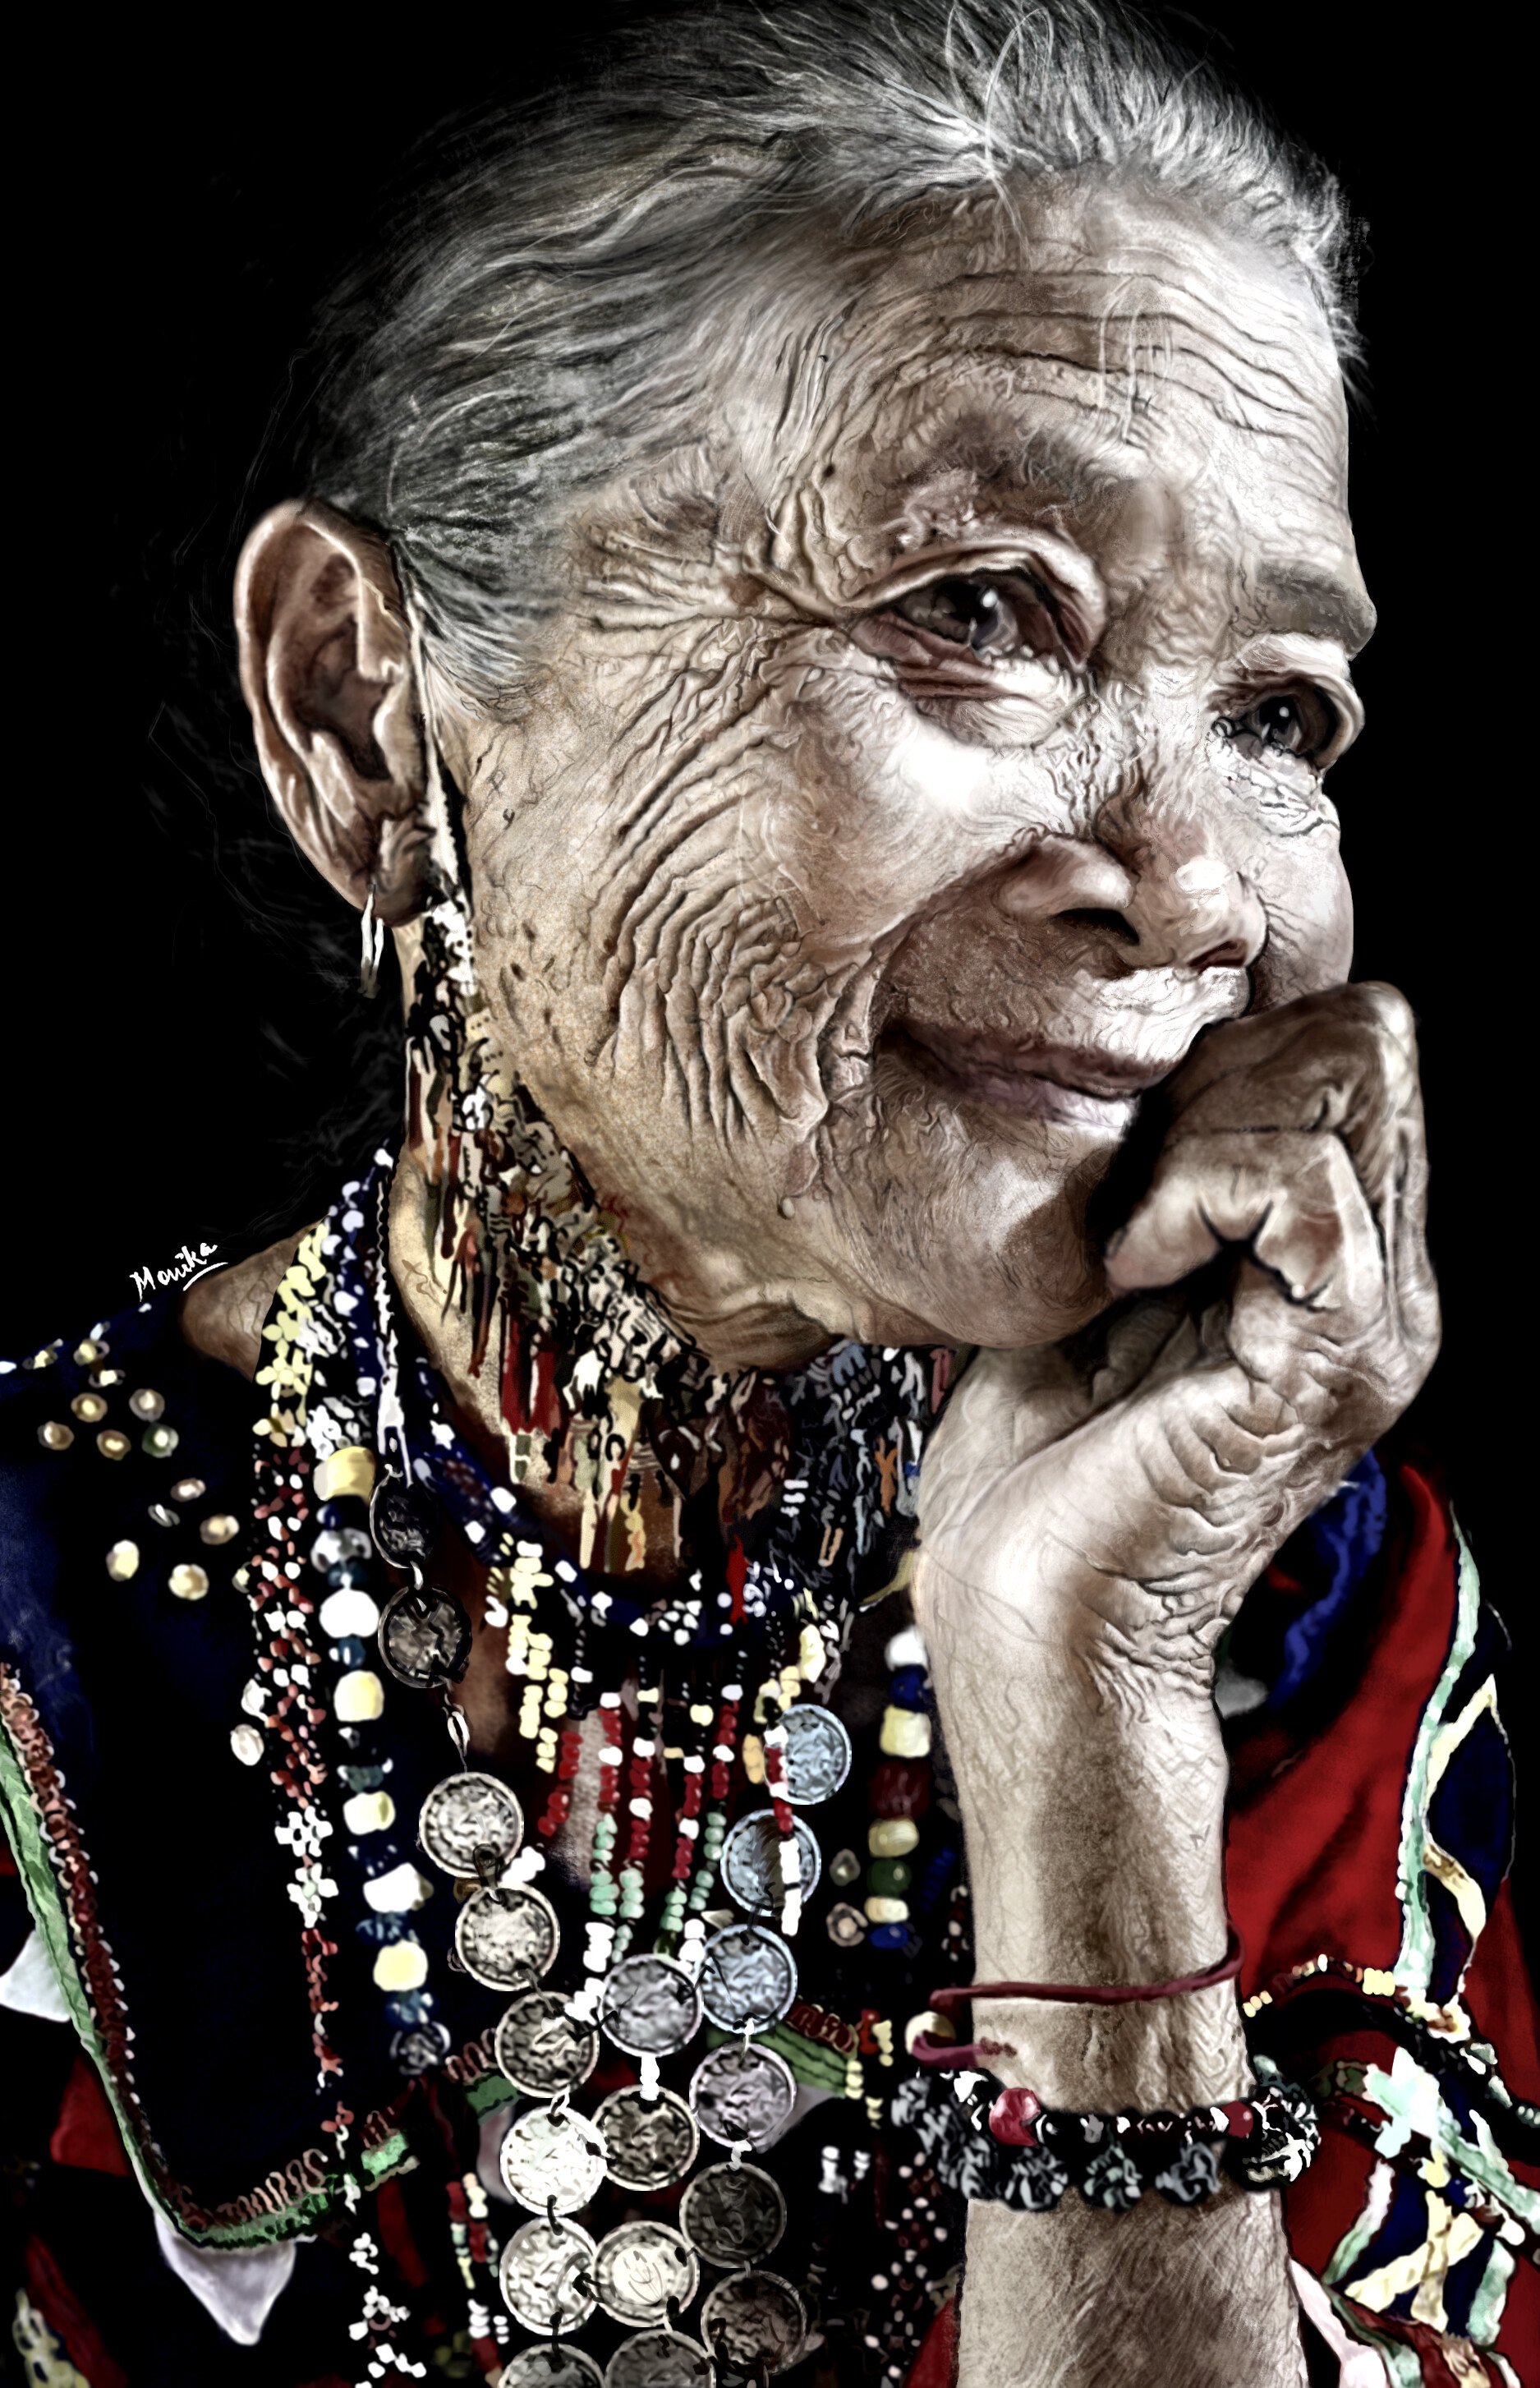 Monika Khanduja Hyper Realistic Digital Painting Of An Old Woman